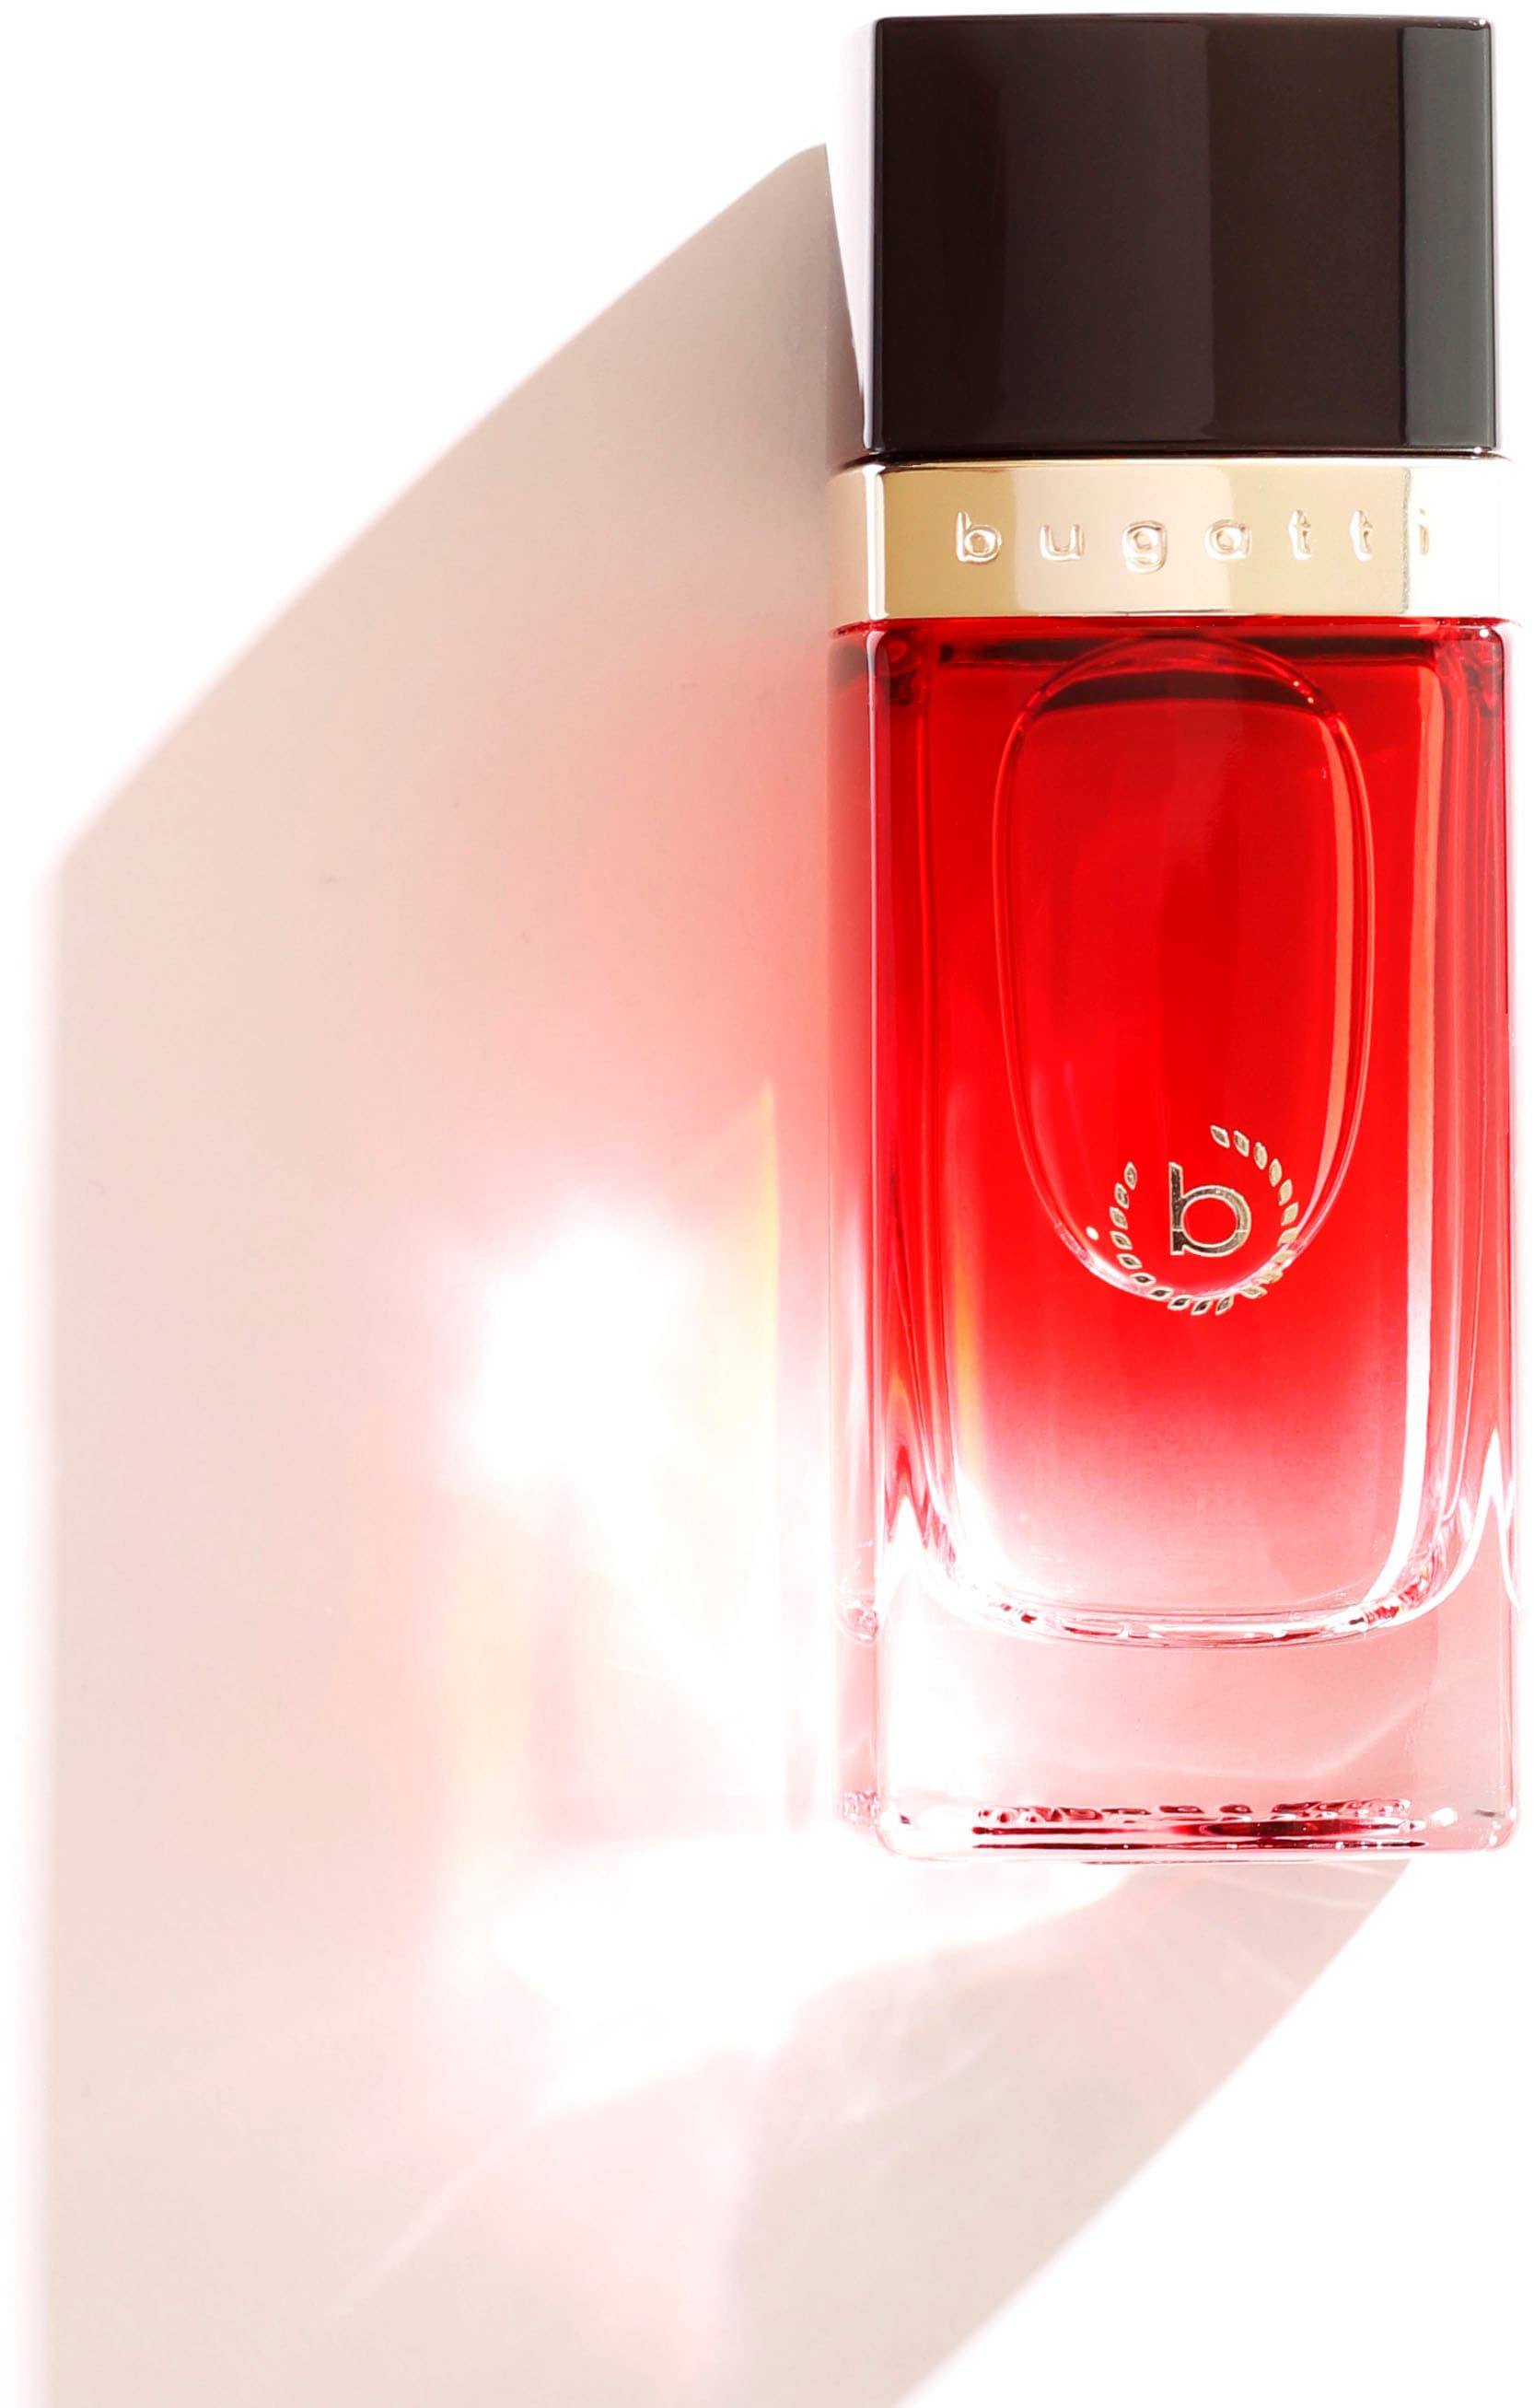 60 BAUR for Eleganza »BUGATTI ml« Parfum her bugatti Eau Rossa EdP | de